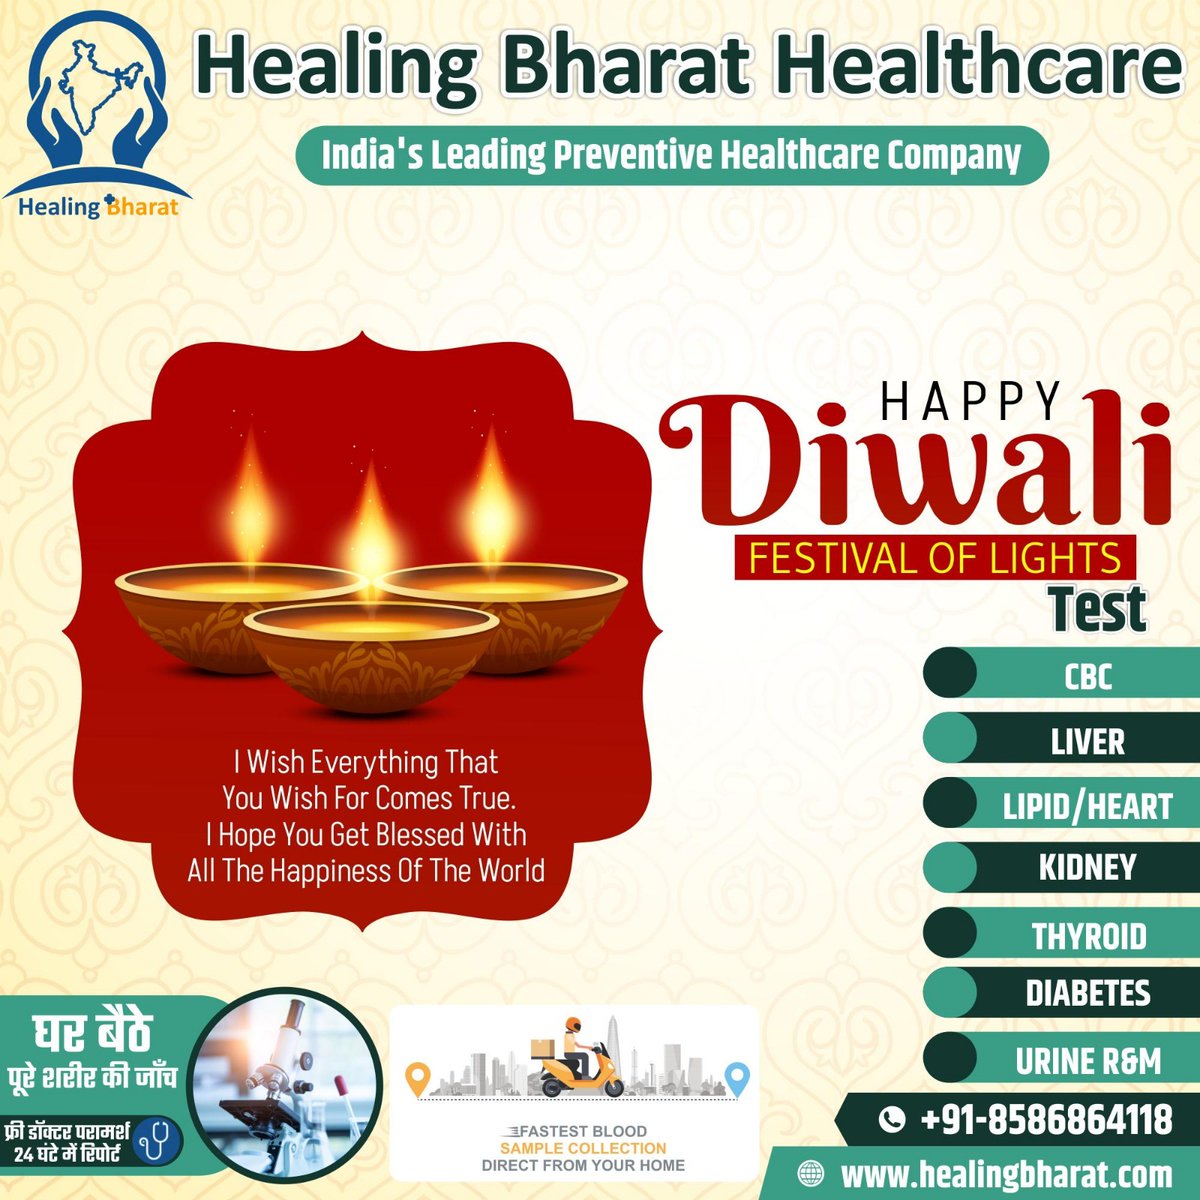 🪔 @HealingBharat - Preventive Healthcare Company  Wishes Everyone a Very Happy Diwali! 🪔

#diwali2023 #deepawali #festivaloflights #DiwaliCelebration2023 #Deepotsav #HappyDiwali